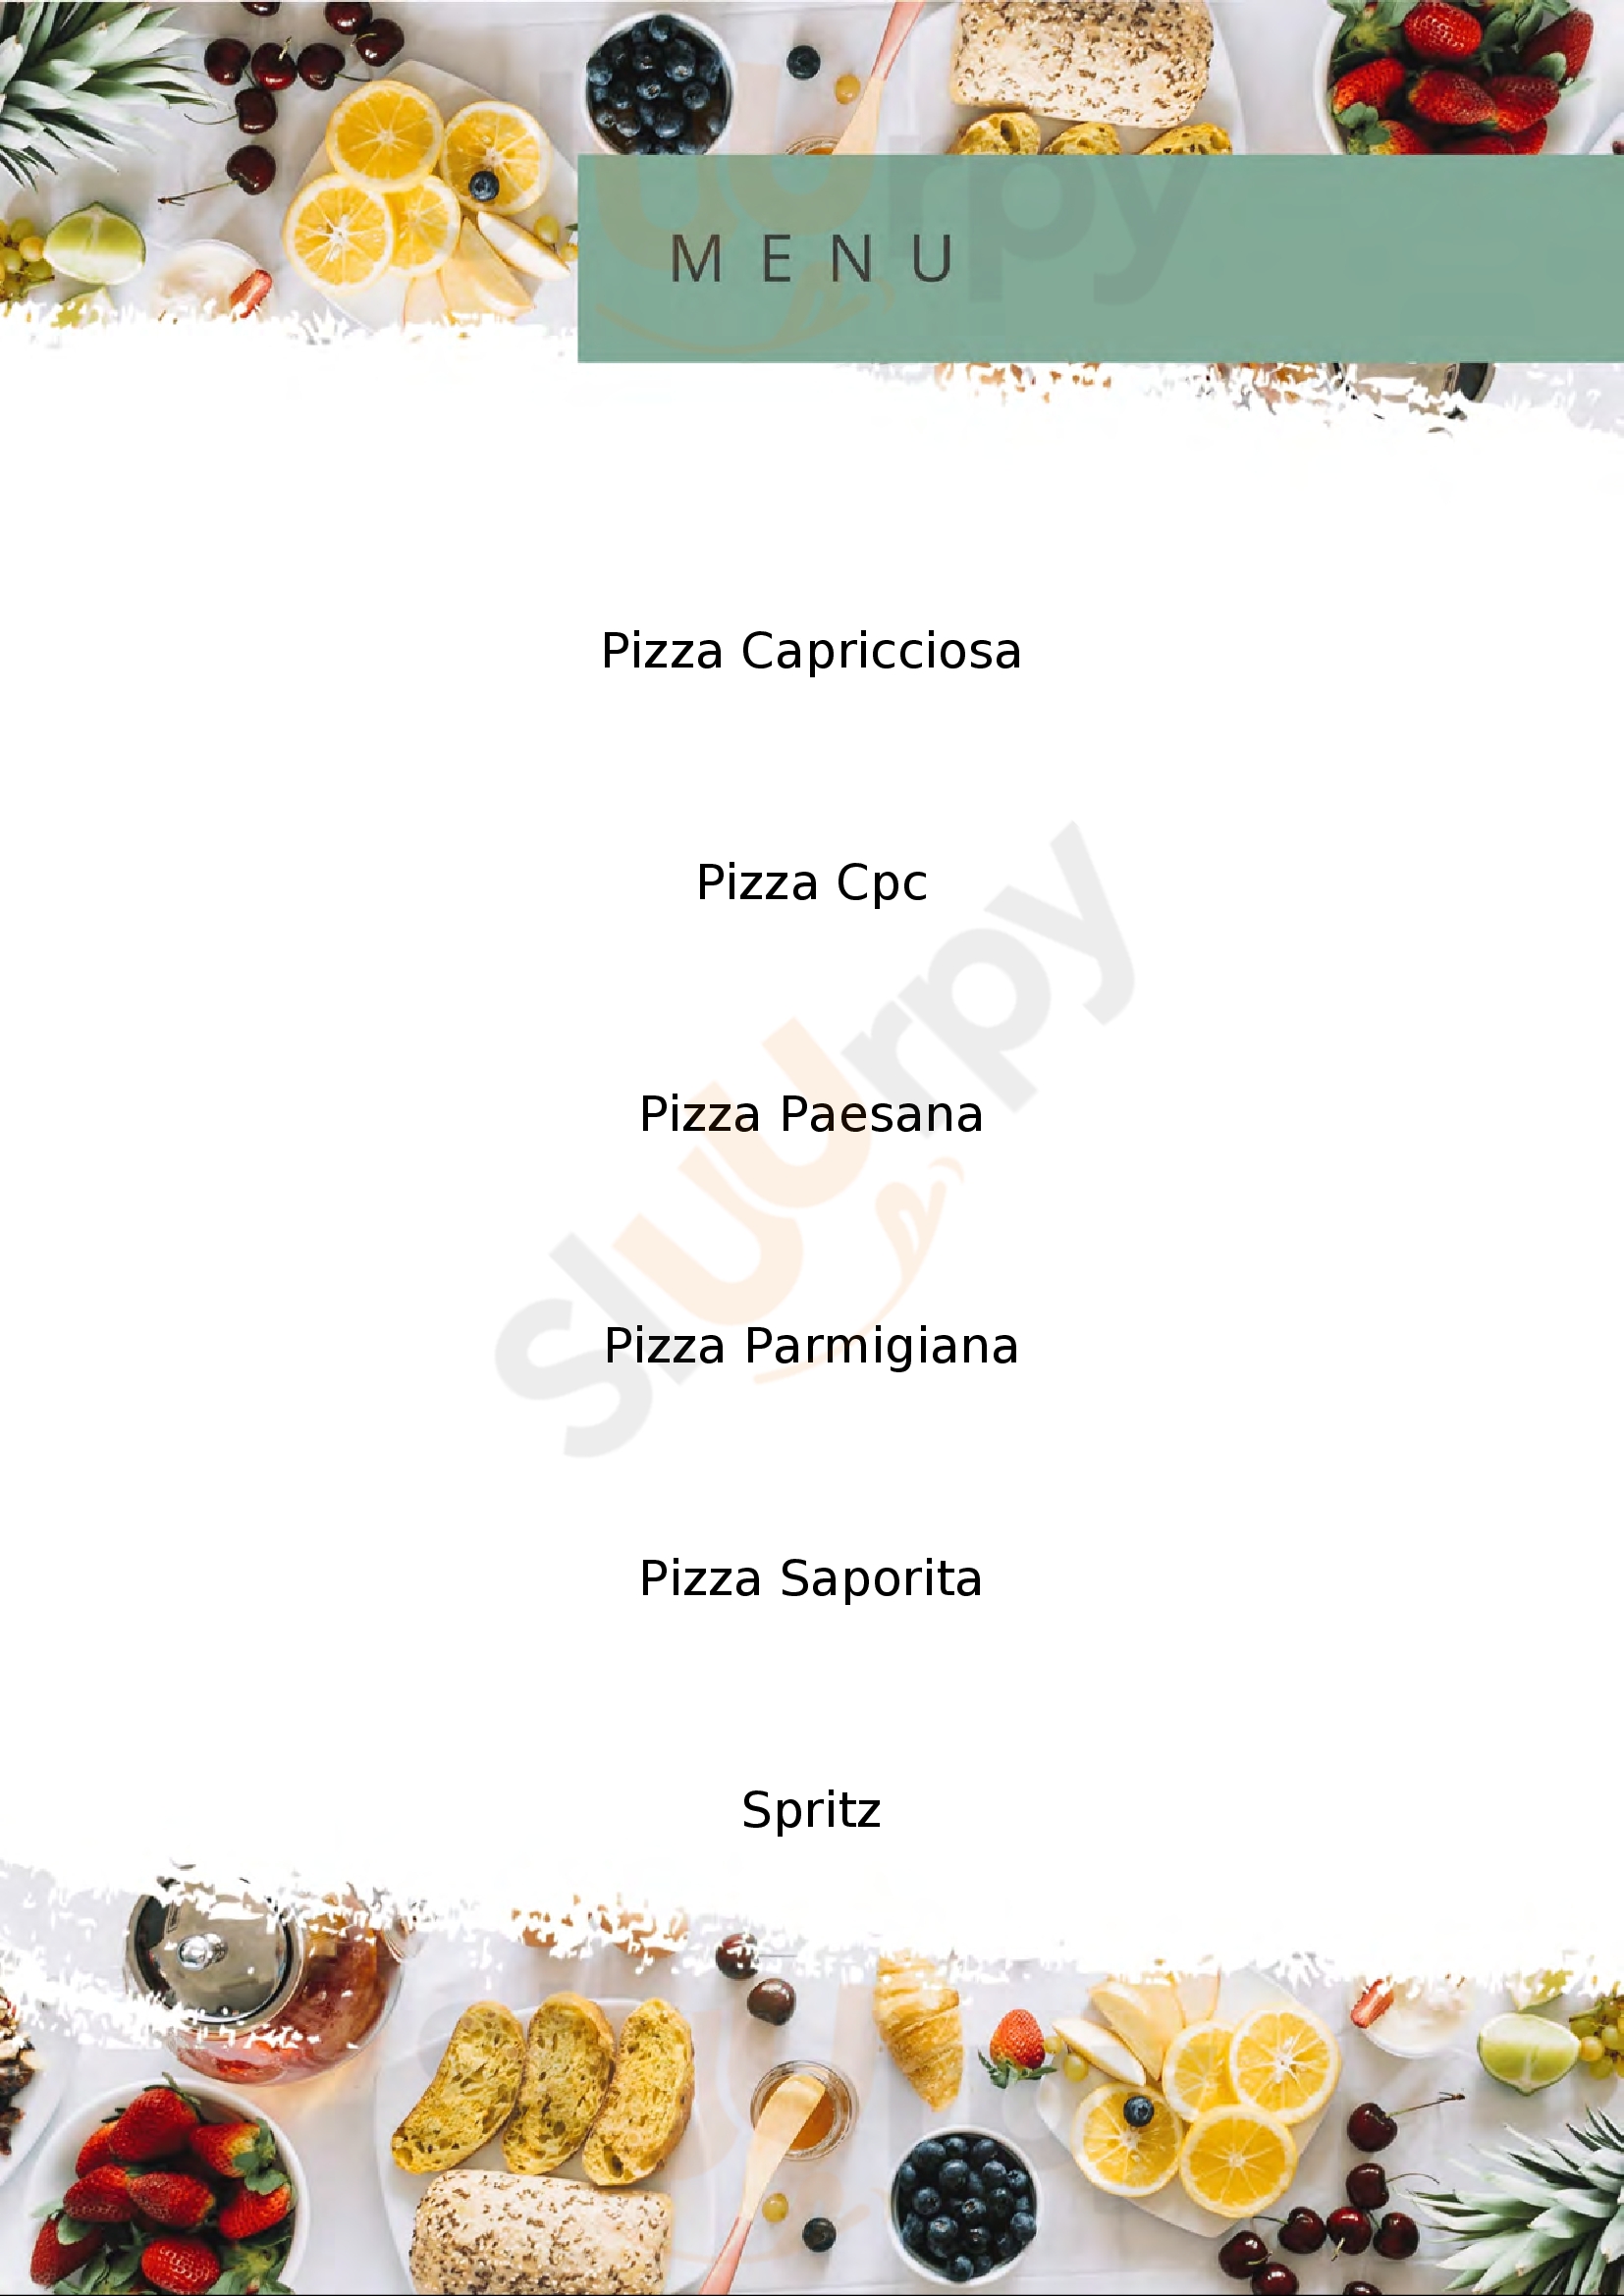 Mokè Pizzeria San Bartolomeo menù 1 pagina